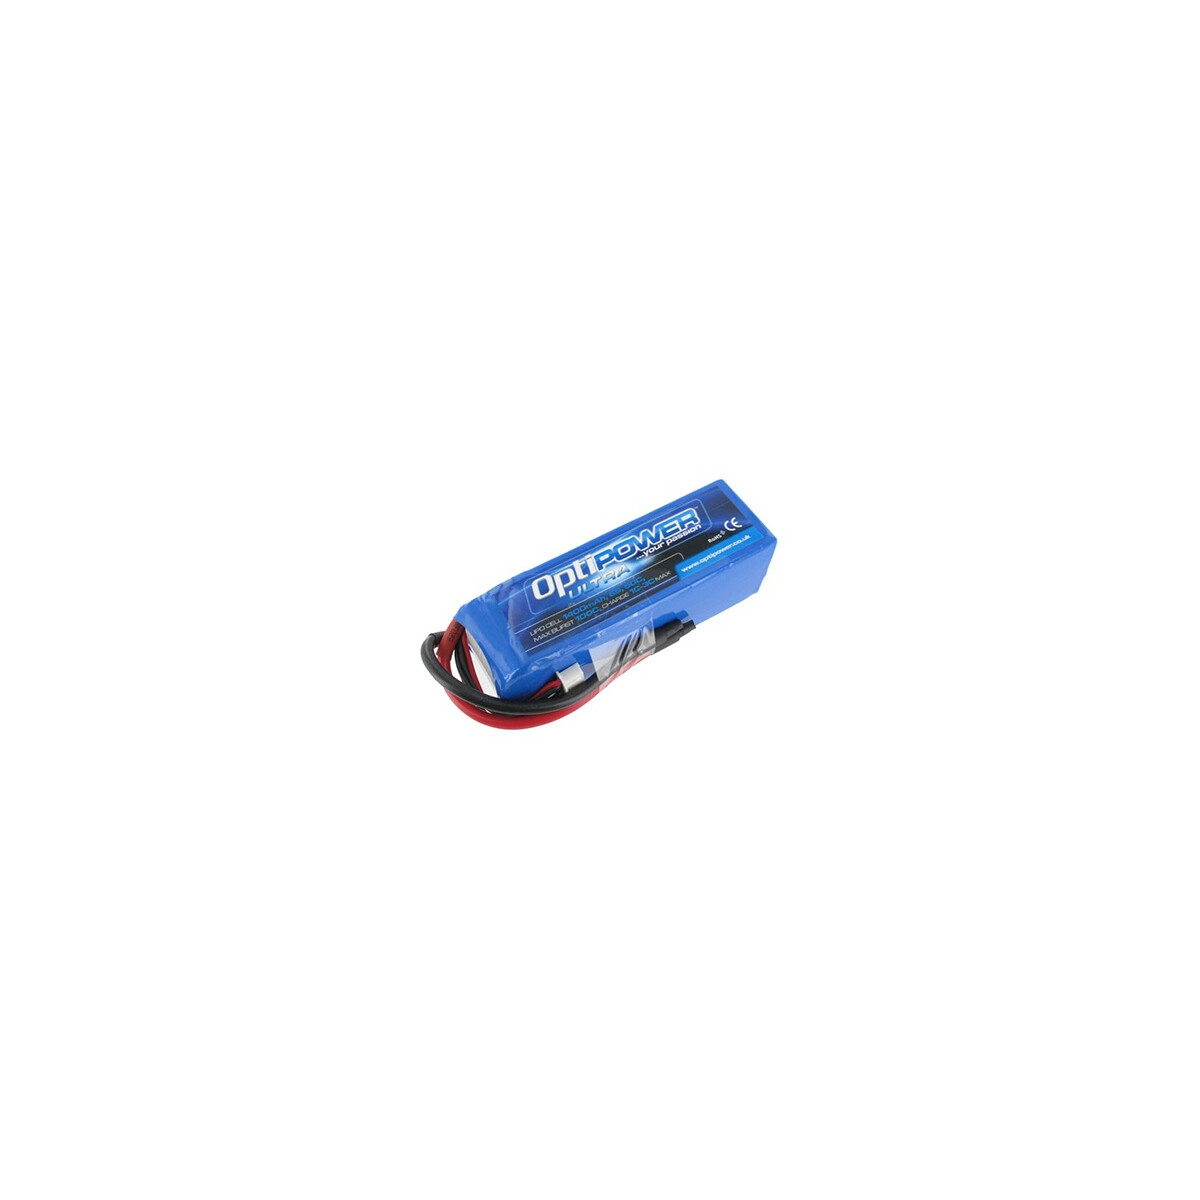 OptiPower Ultra 50C Lipo Cell Battery 1400mAh 6S 50C